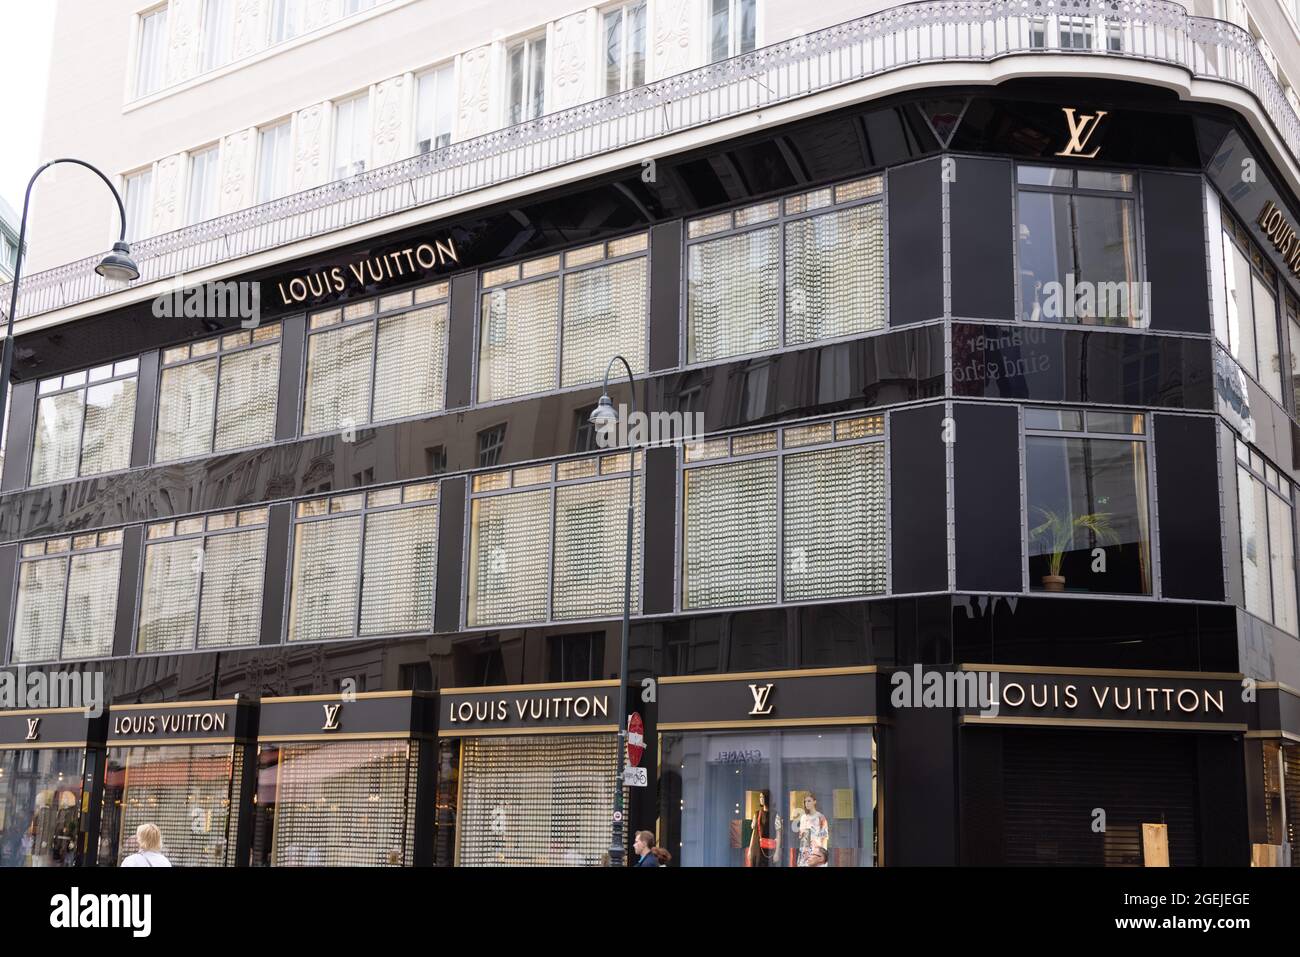 Louis Vuitton shop, Warsaw, Poland Stock Photo - Alamy